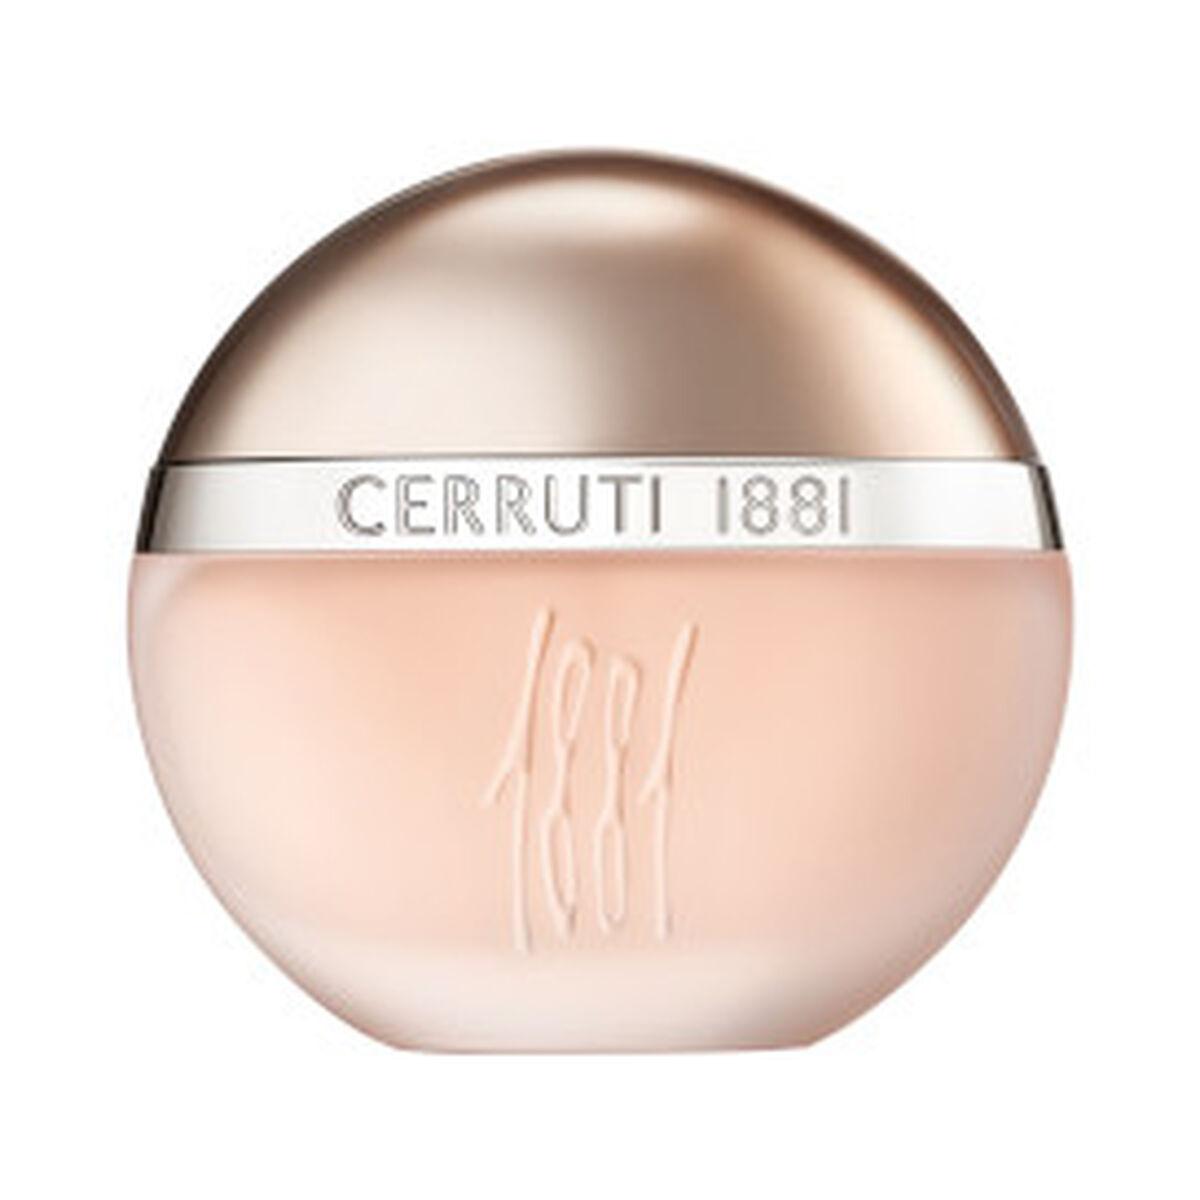 Parfum Femme Cerruti EDT 1881 50 ml